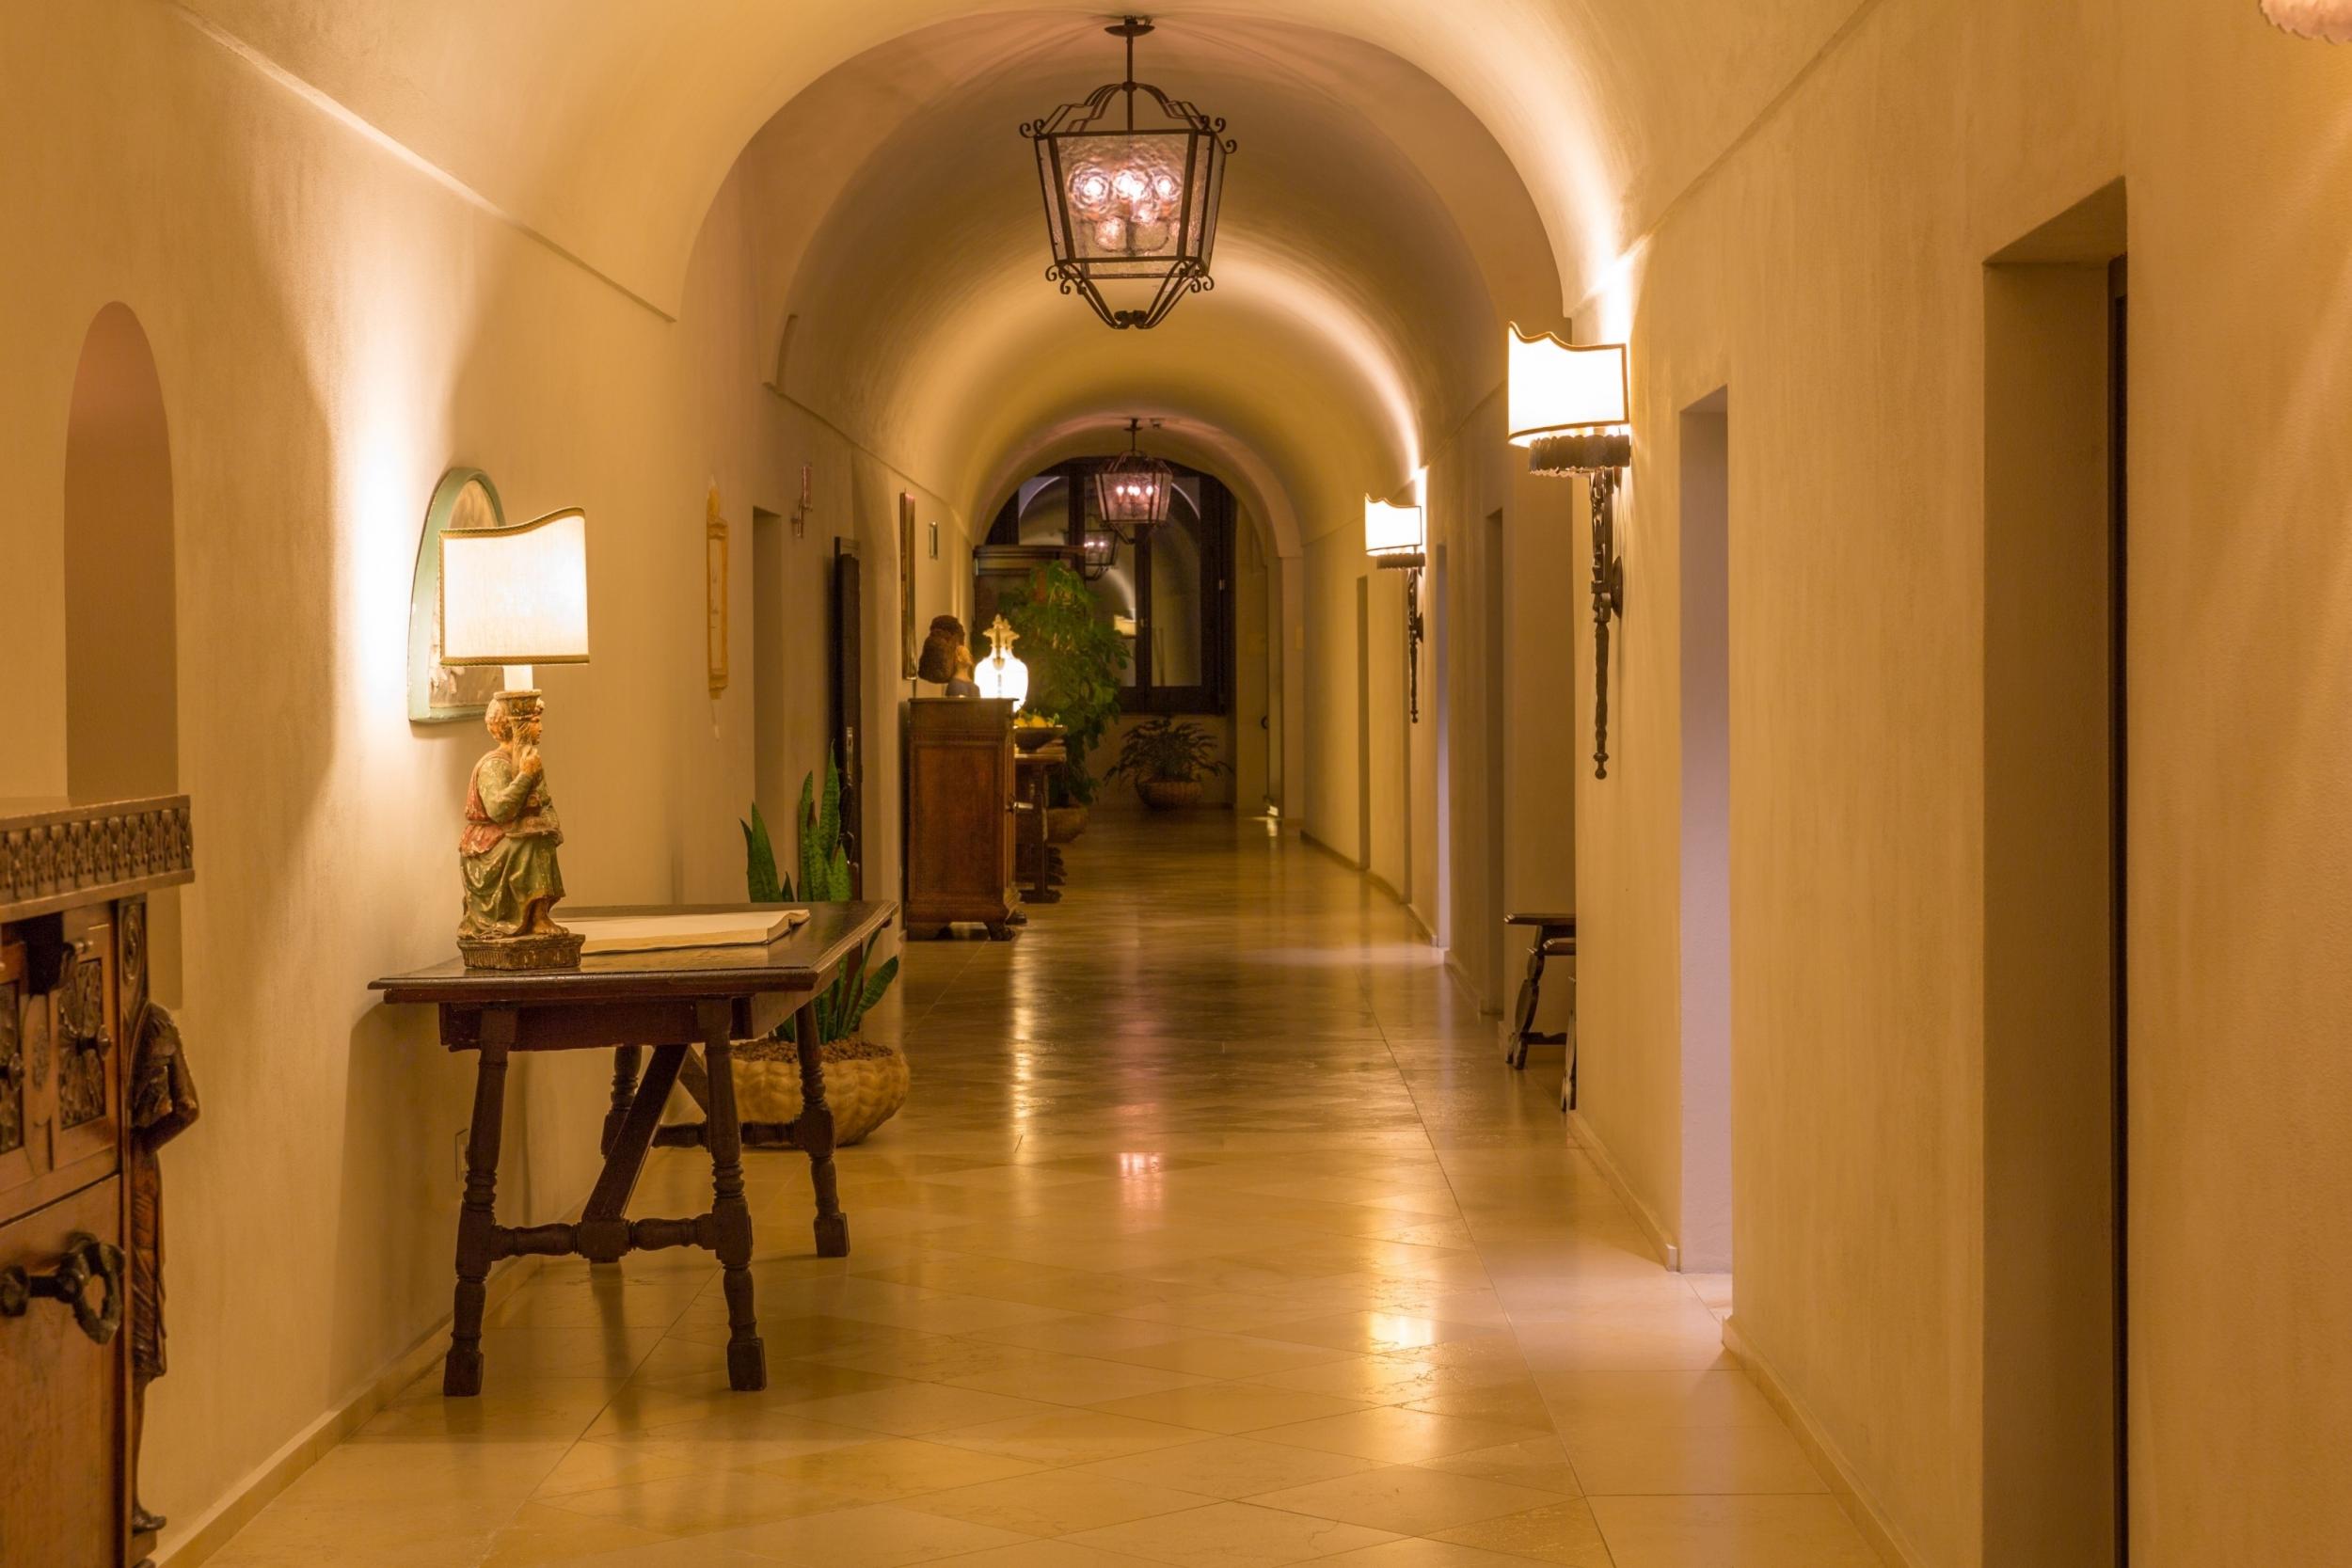 Gently lit stone corridors add to the spiritual feel at Monastero Santa Rosa